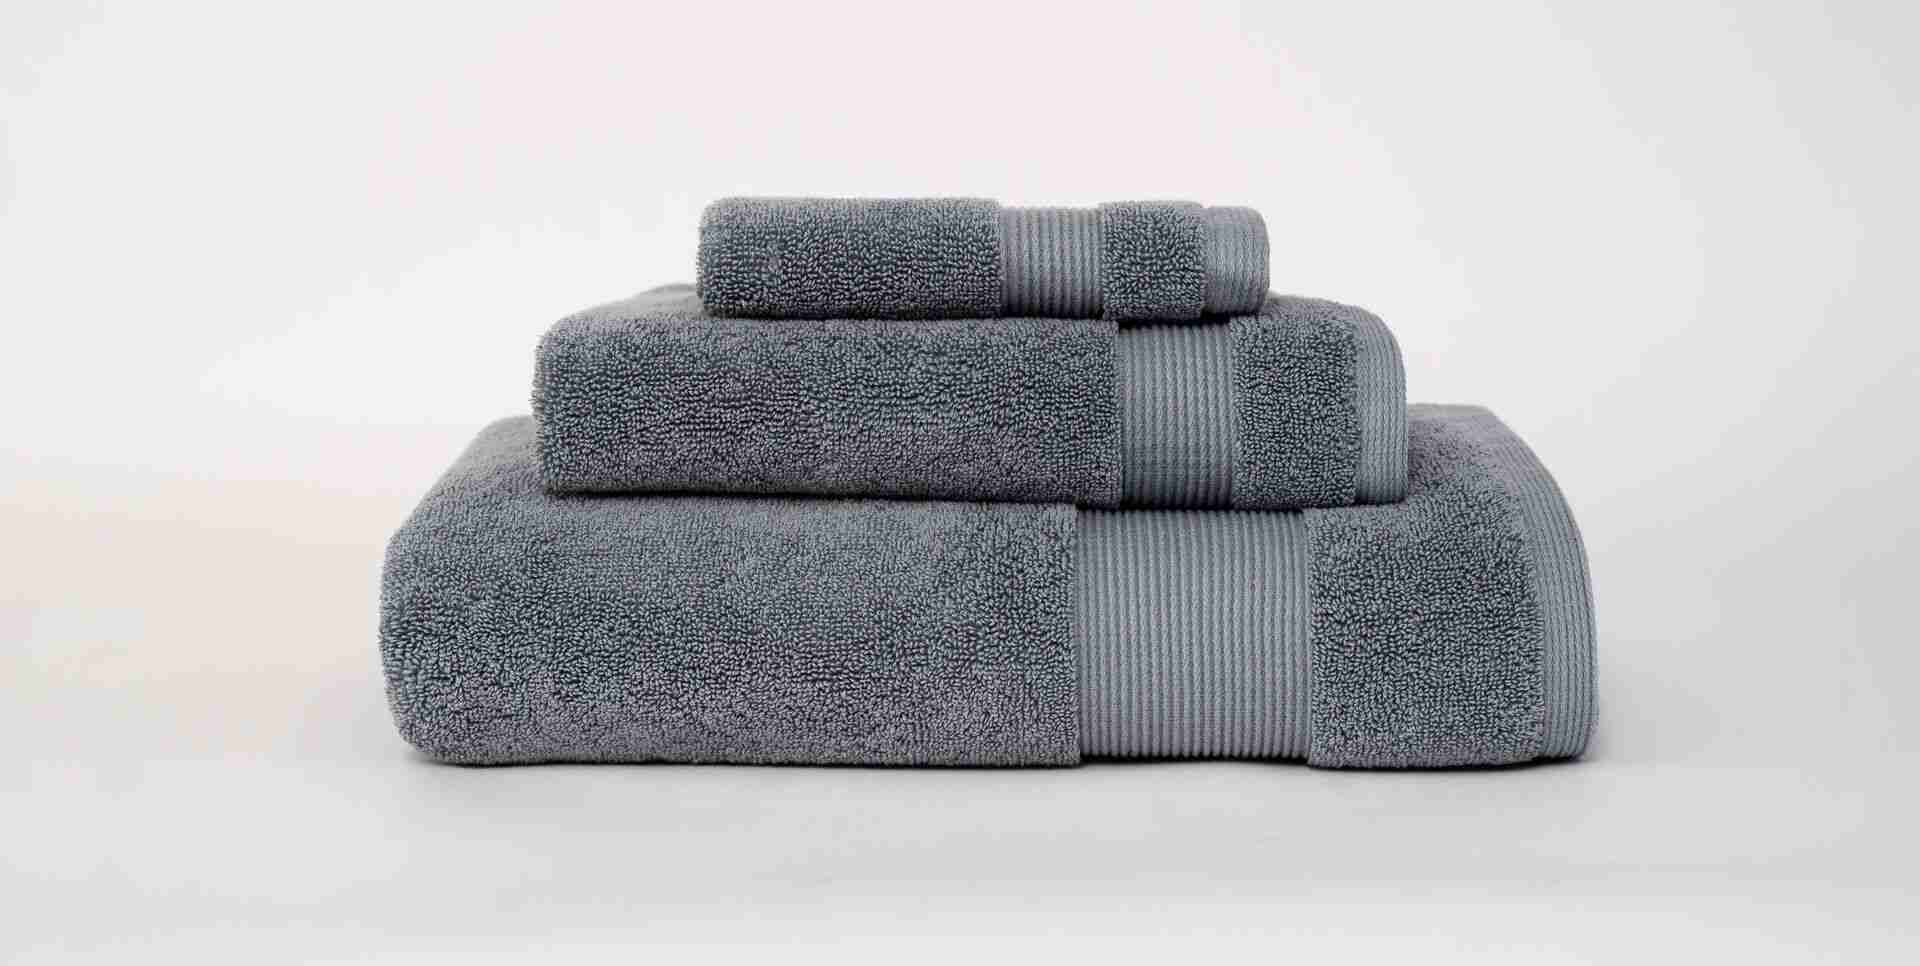 saatva plush towel collection